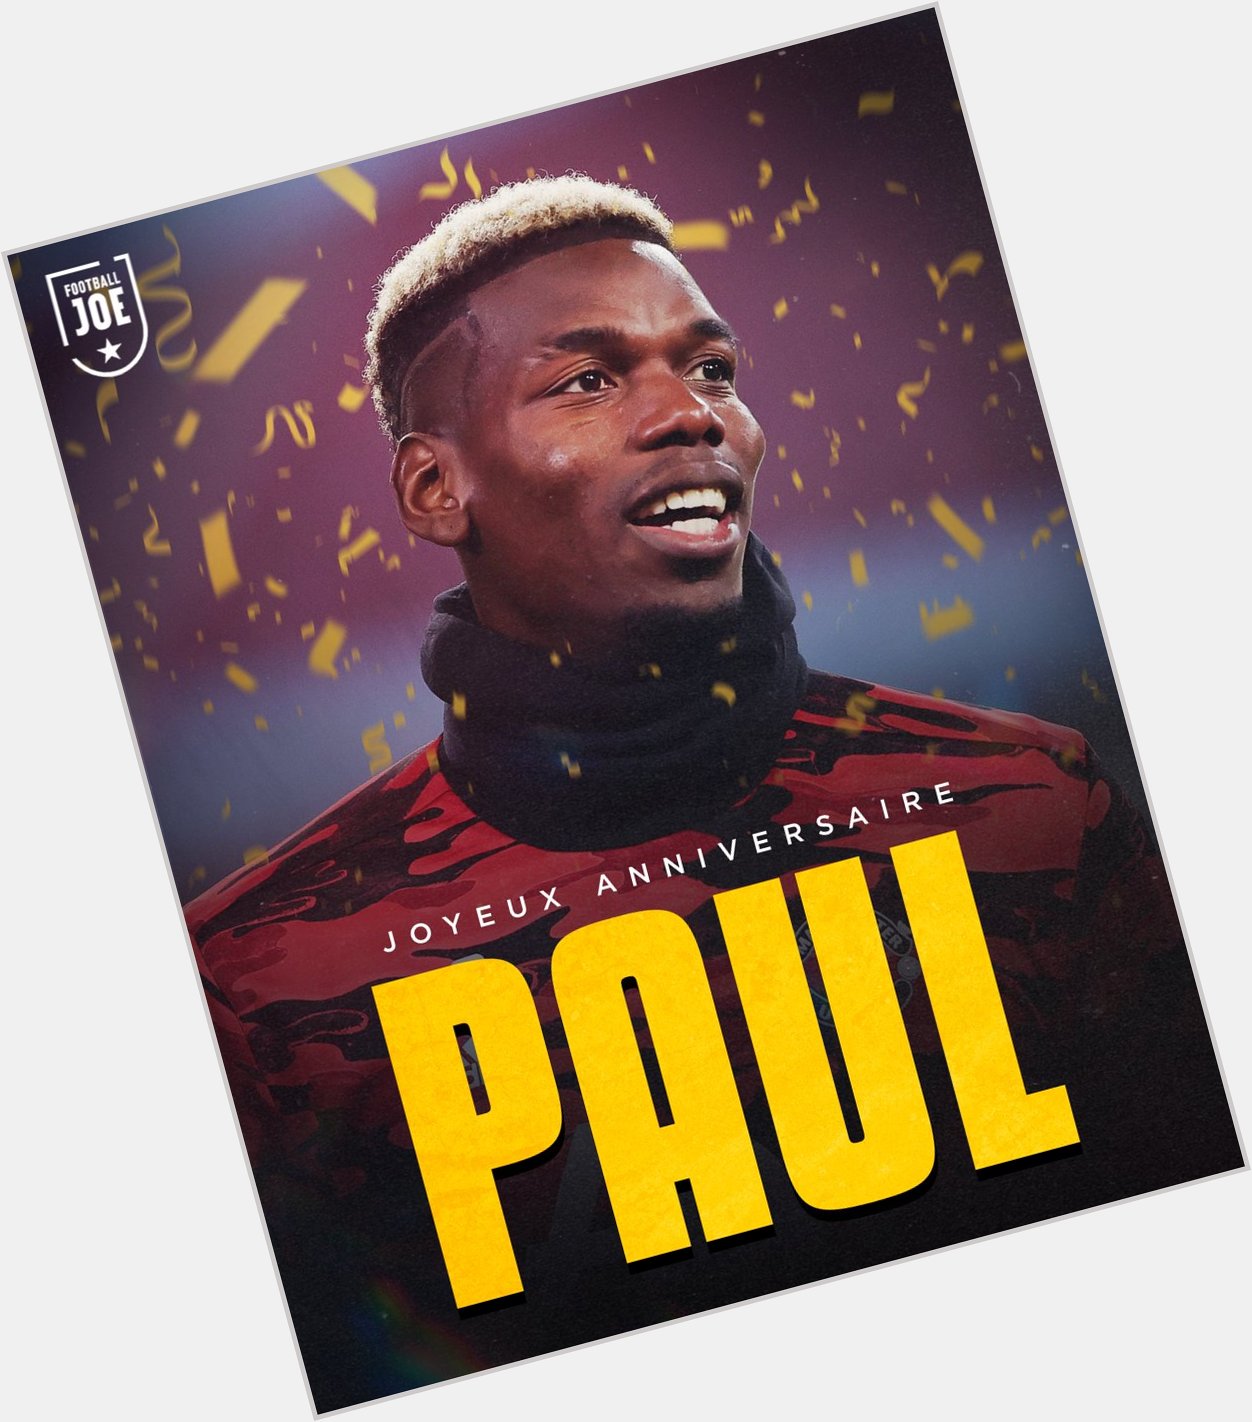 Happy birthday to World Cup winner Paul Pogba - 28 today 